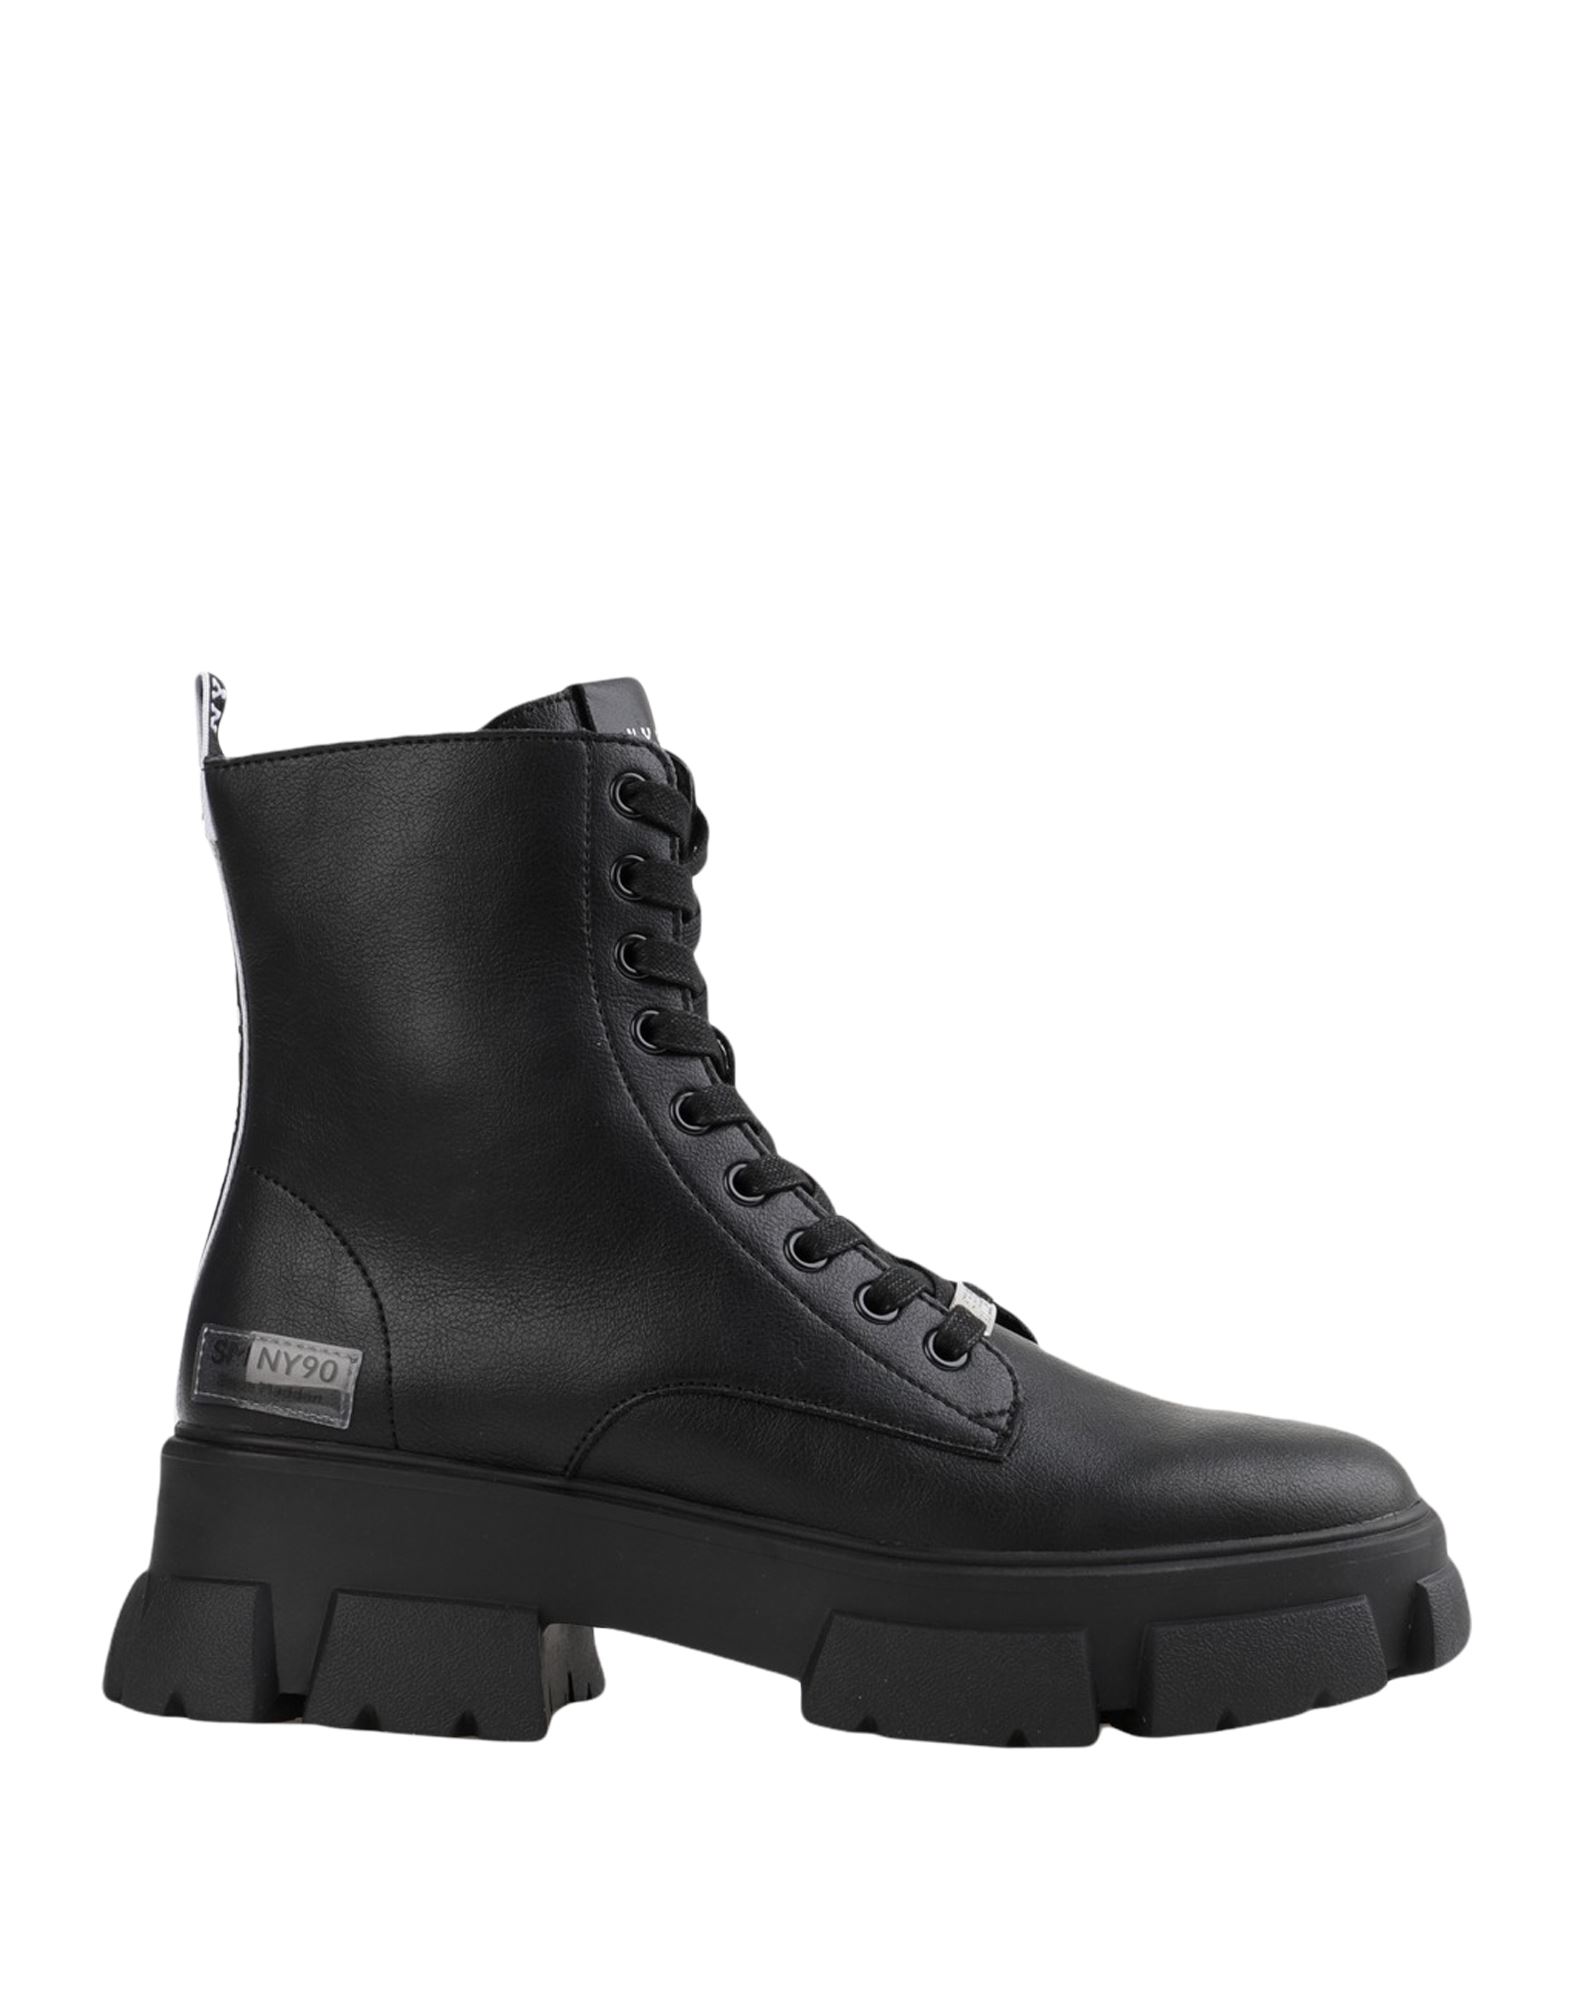 STEVE MADDEN Ankle boots - Item 11959666